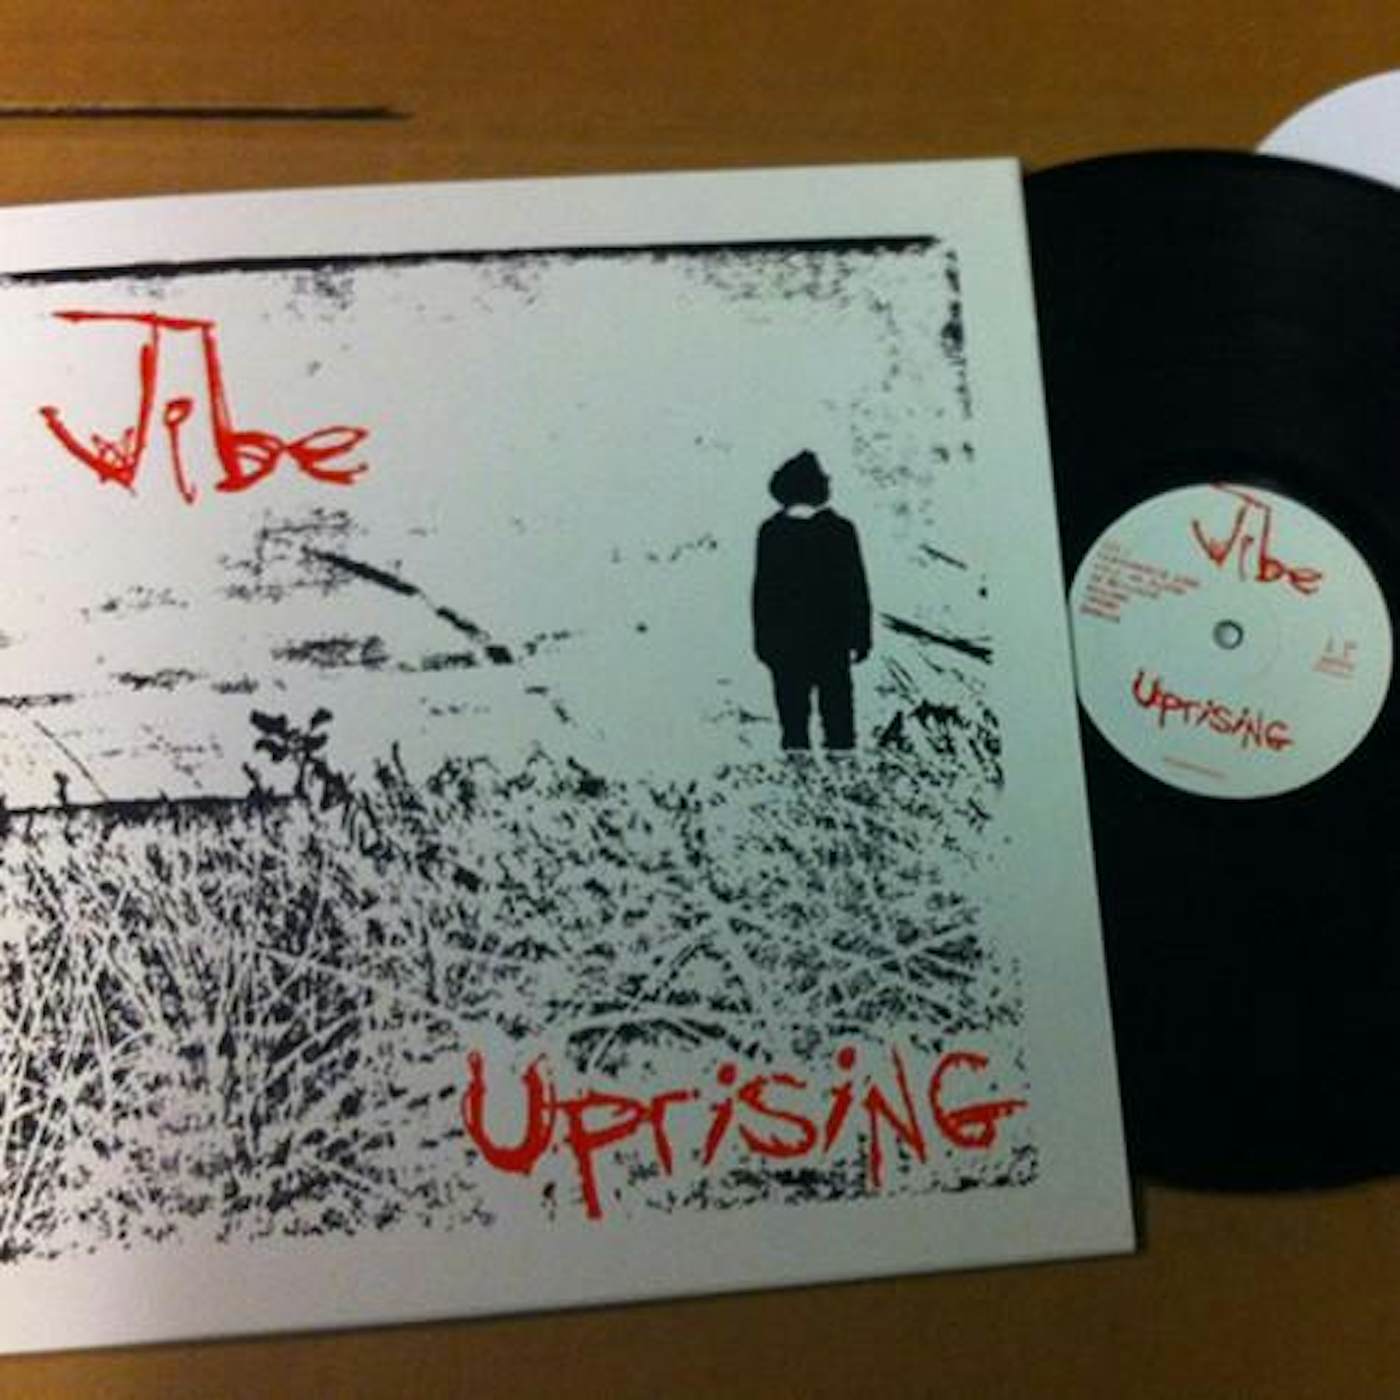 JIBE - Uprising Vinyl